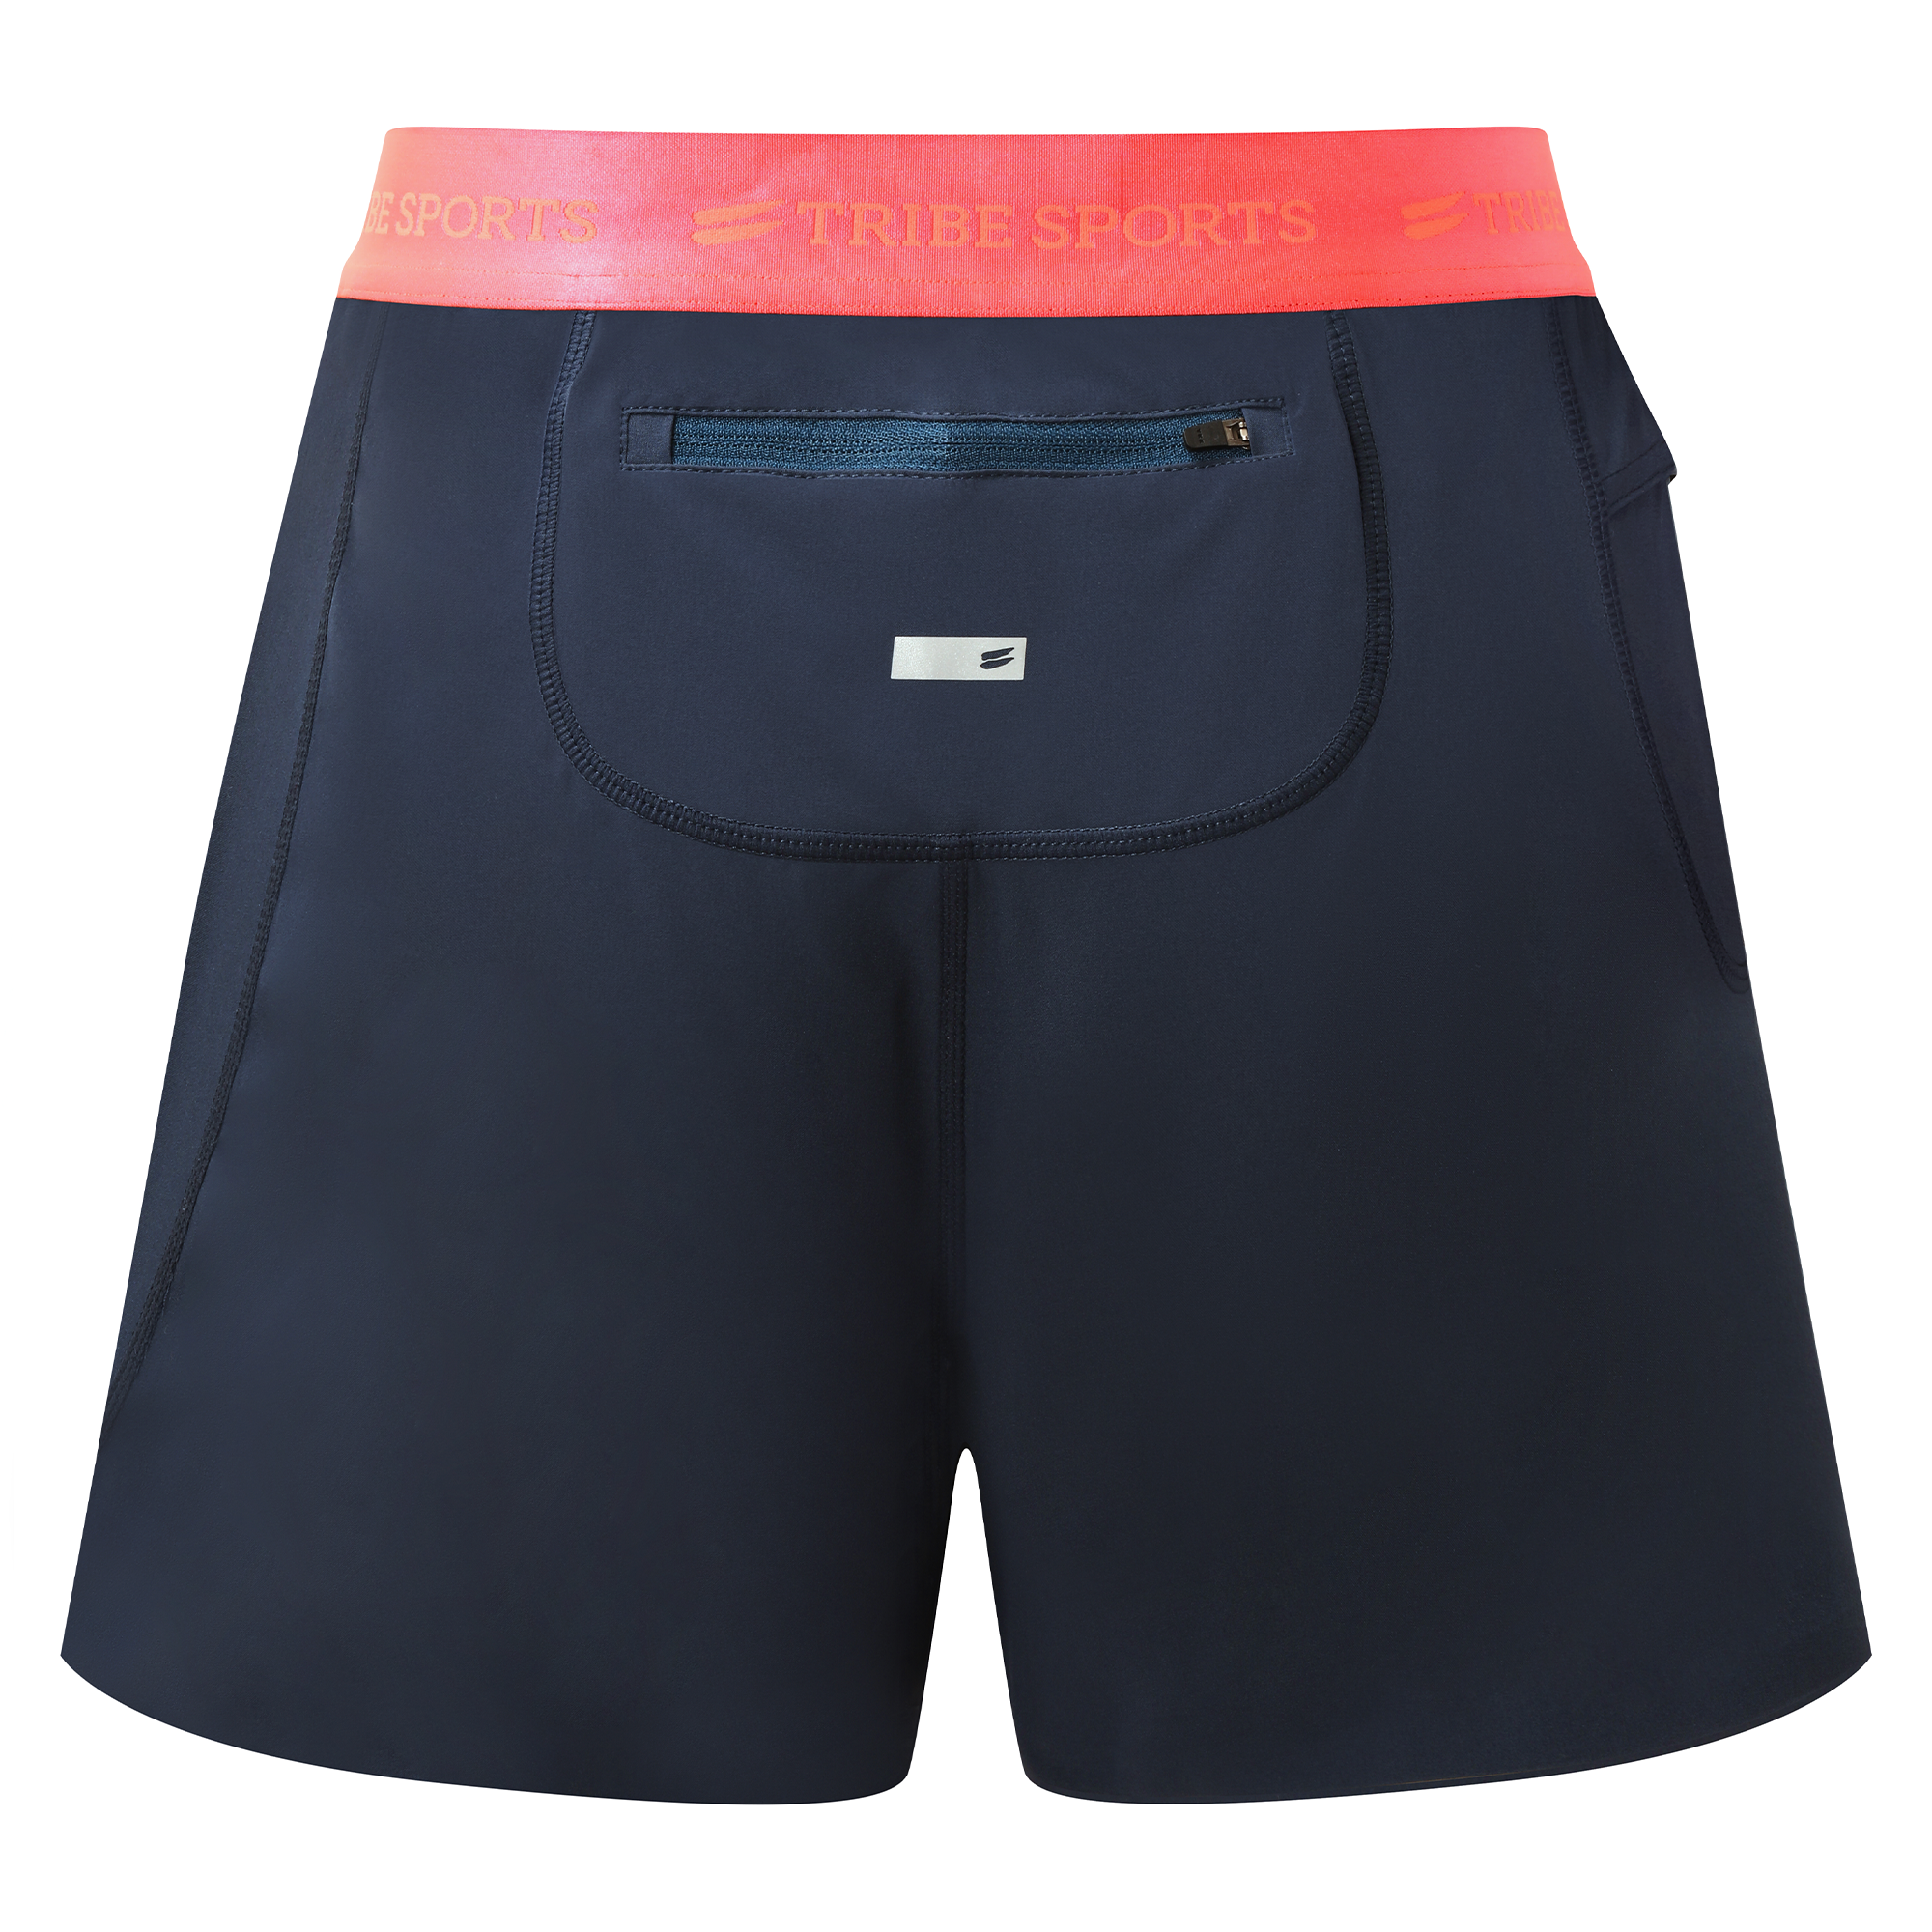 Endure Swift Shorts - Navy/Charcoal Sports - Tribe